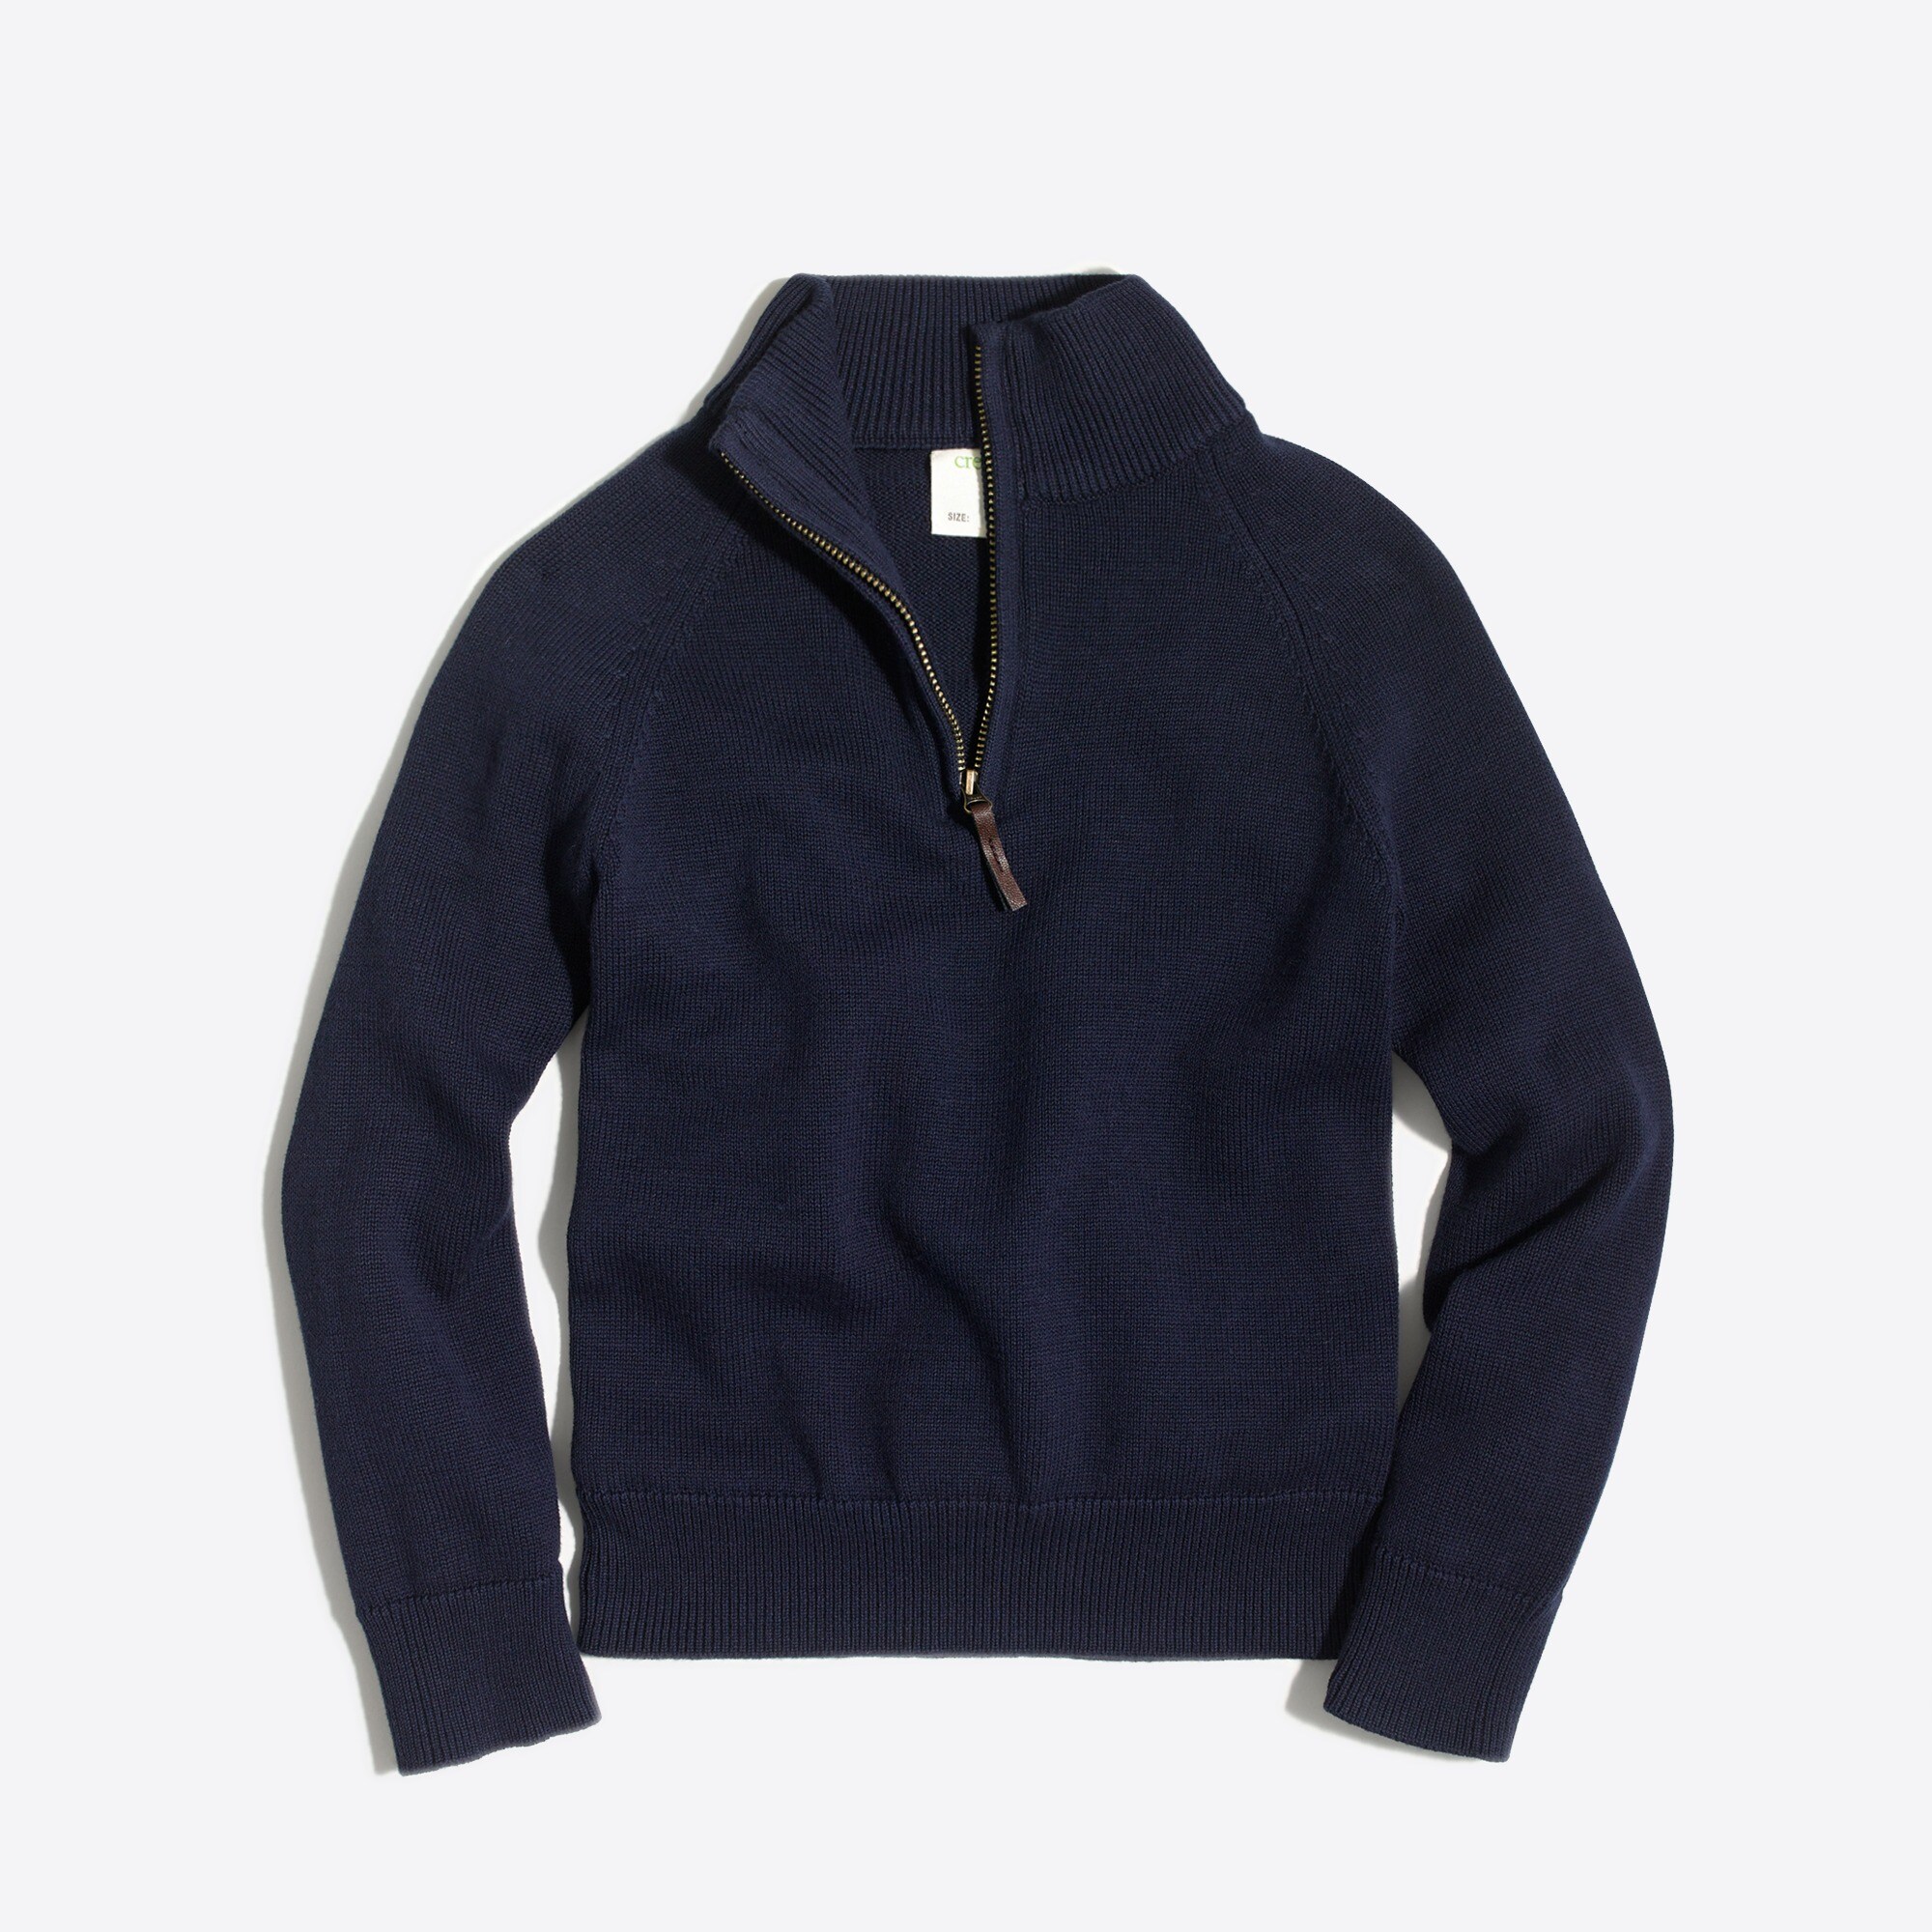  Boys' cotton half-zip pullover sweater